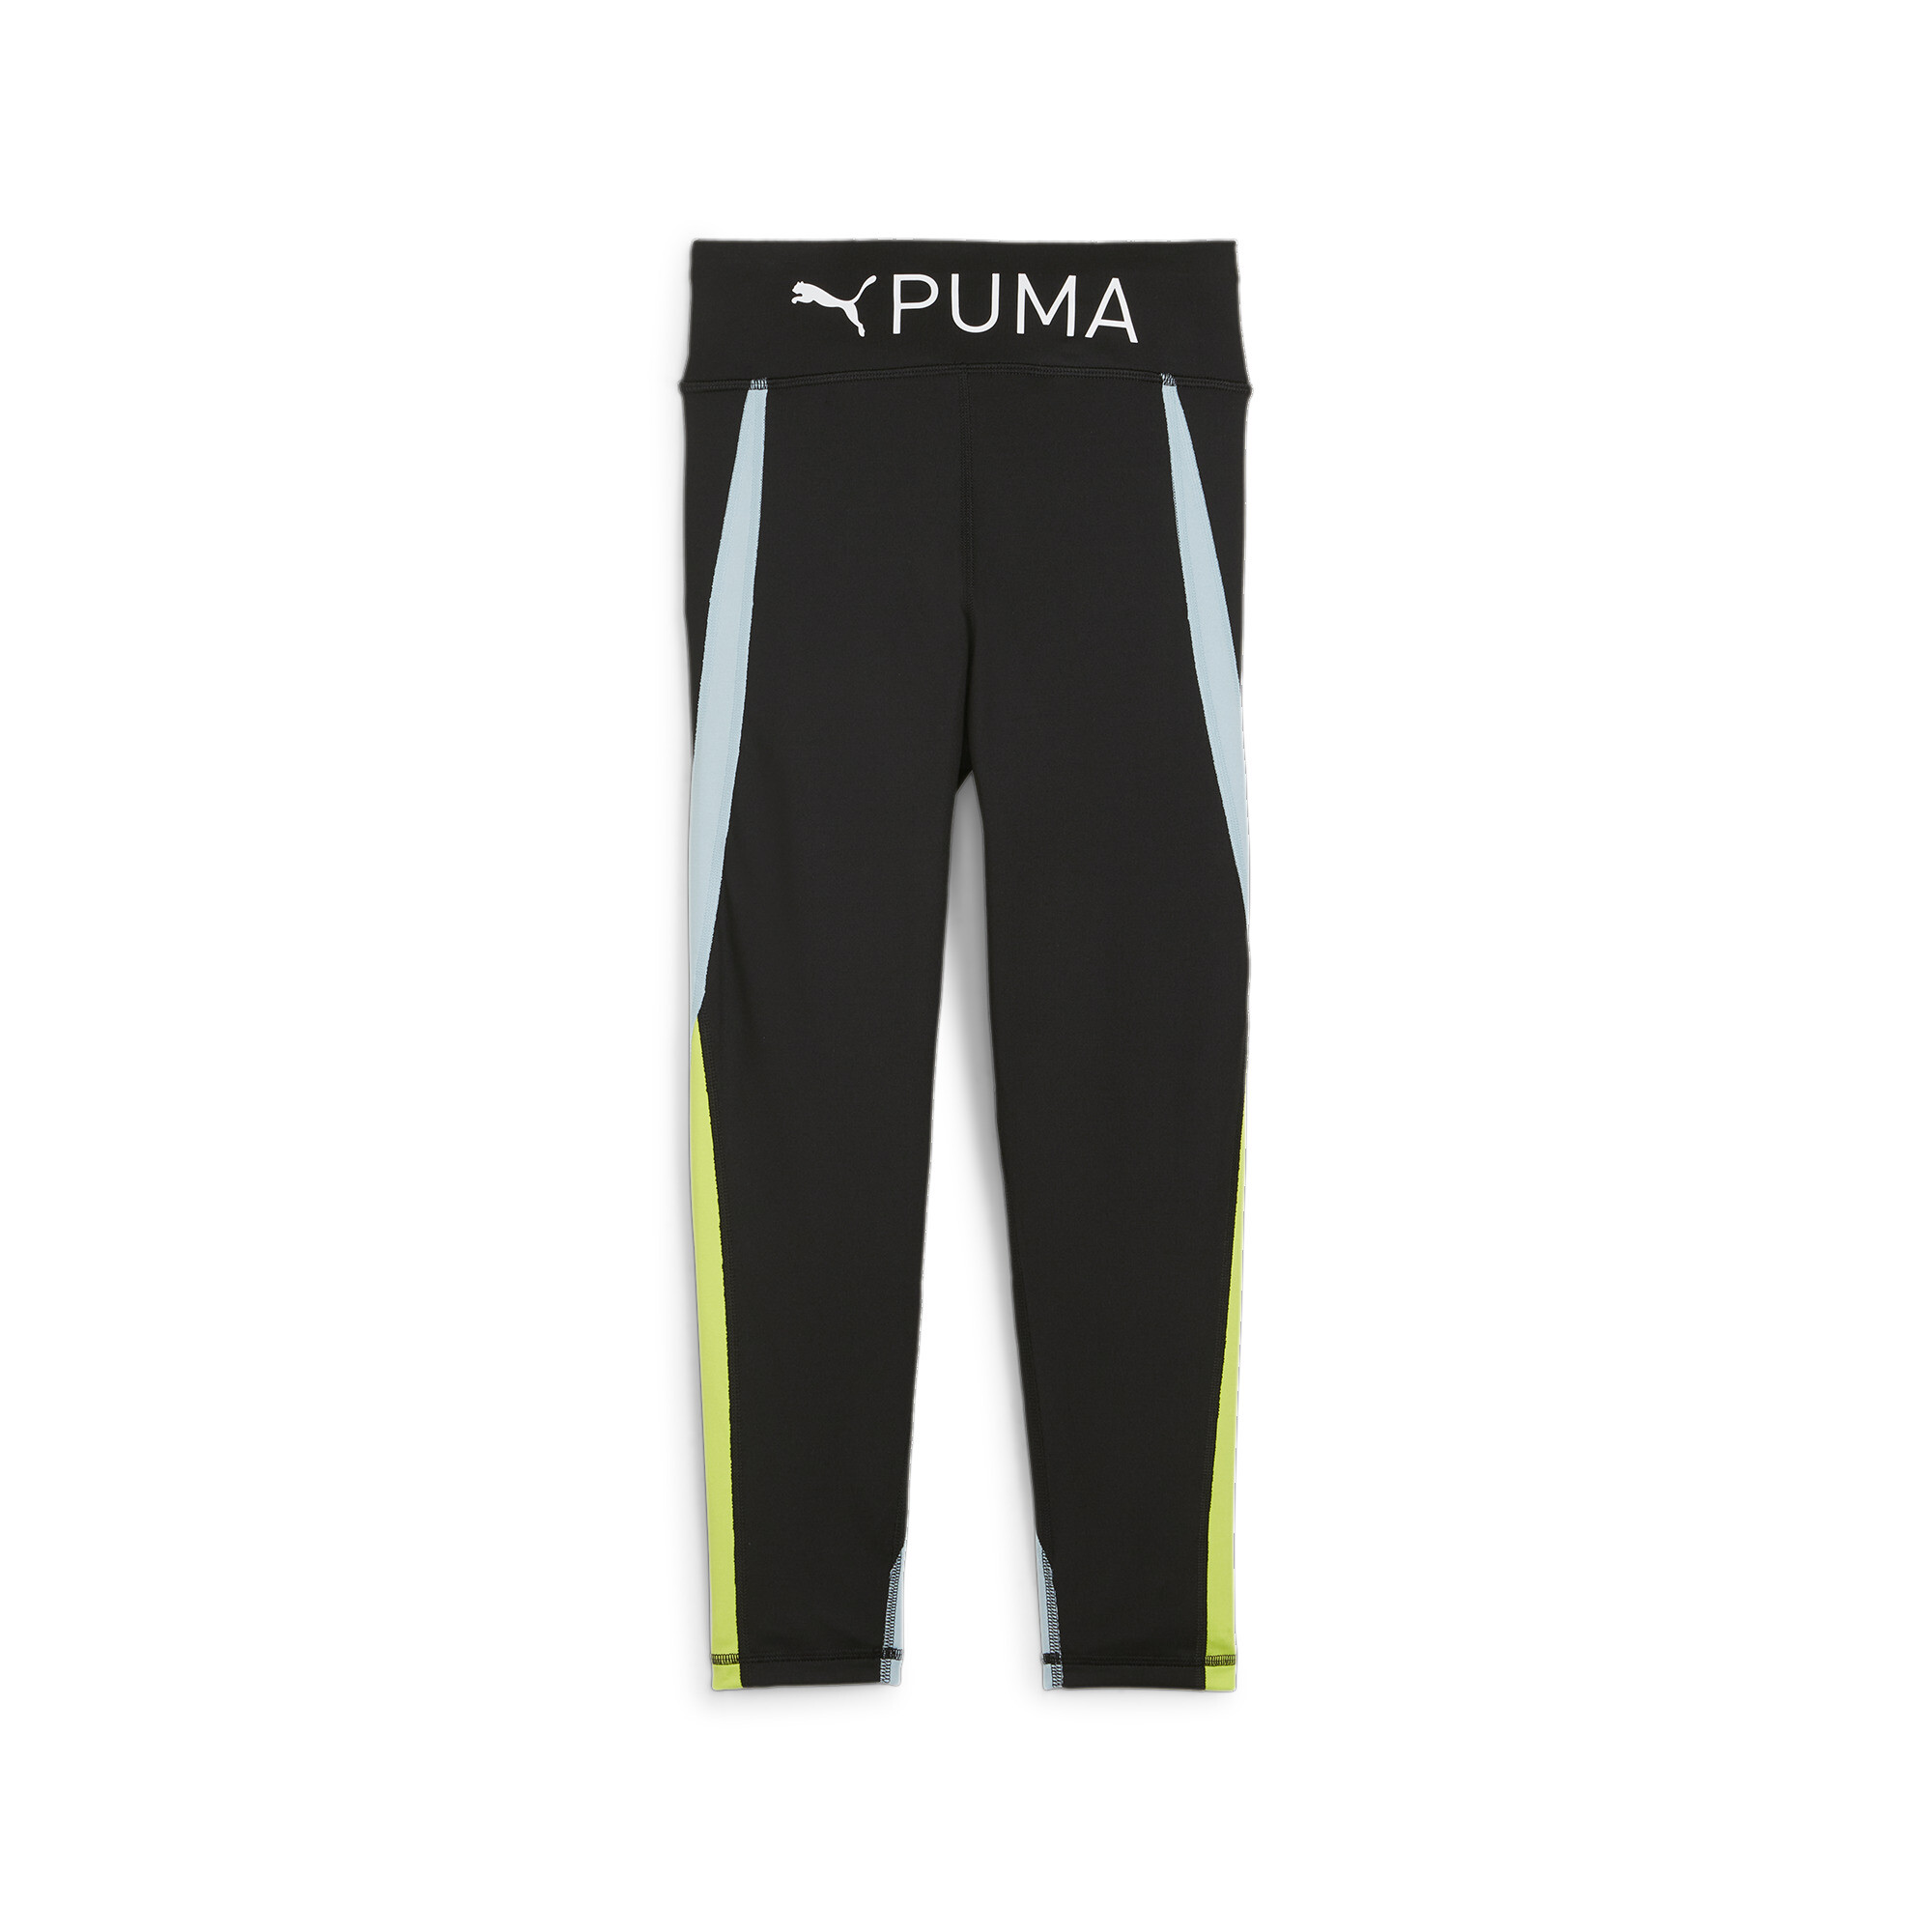 Women's Puma FIT Youth 7/8 Tights, Black, Size 5-6Y, Shop